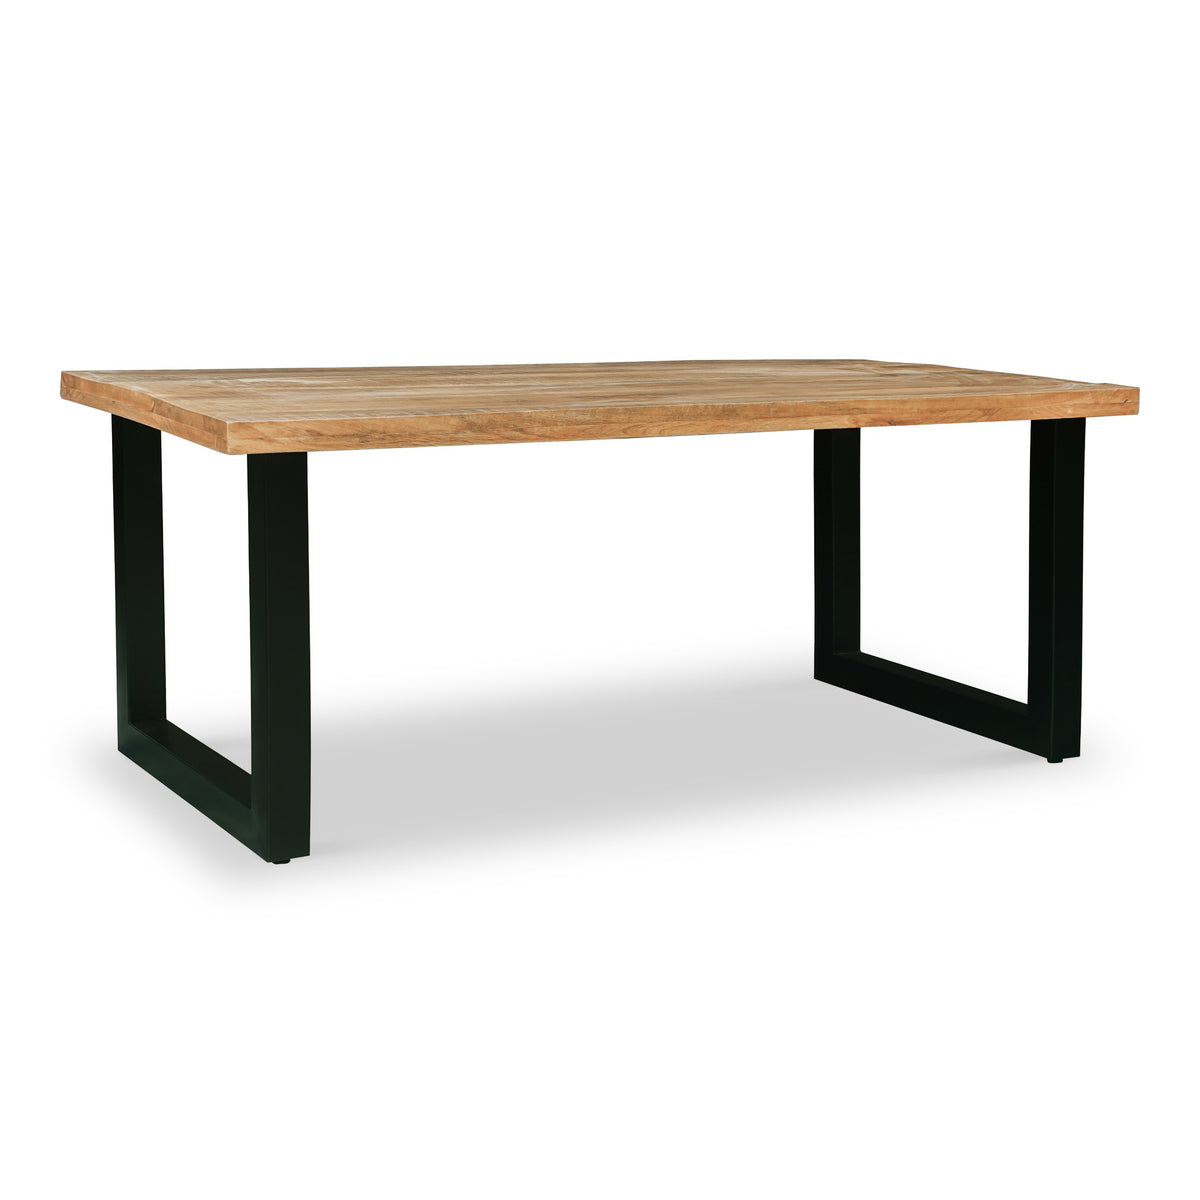 Jaxon Industrial Mango Wood 200cm Rectangular Dining Table from Roseland Furniture